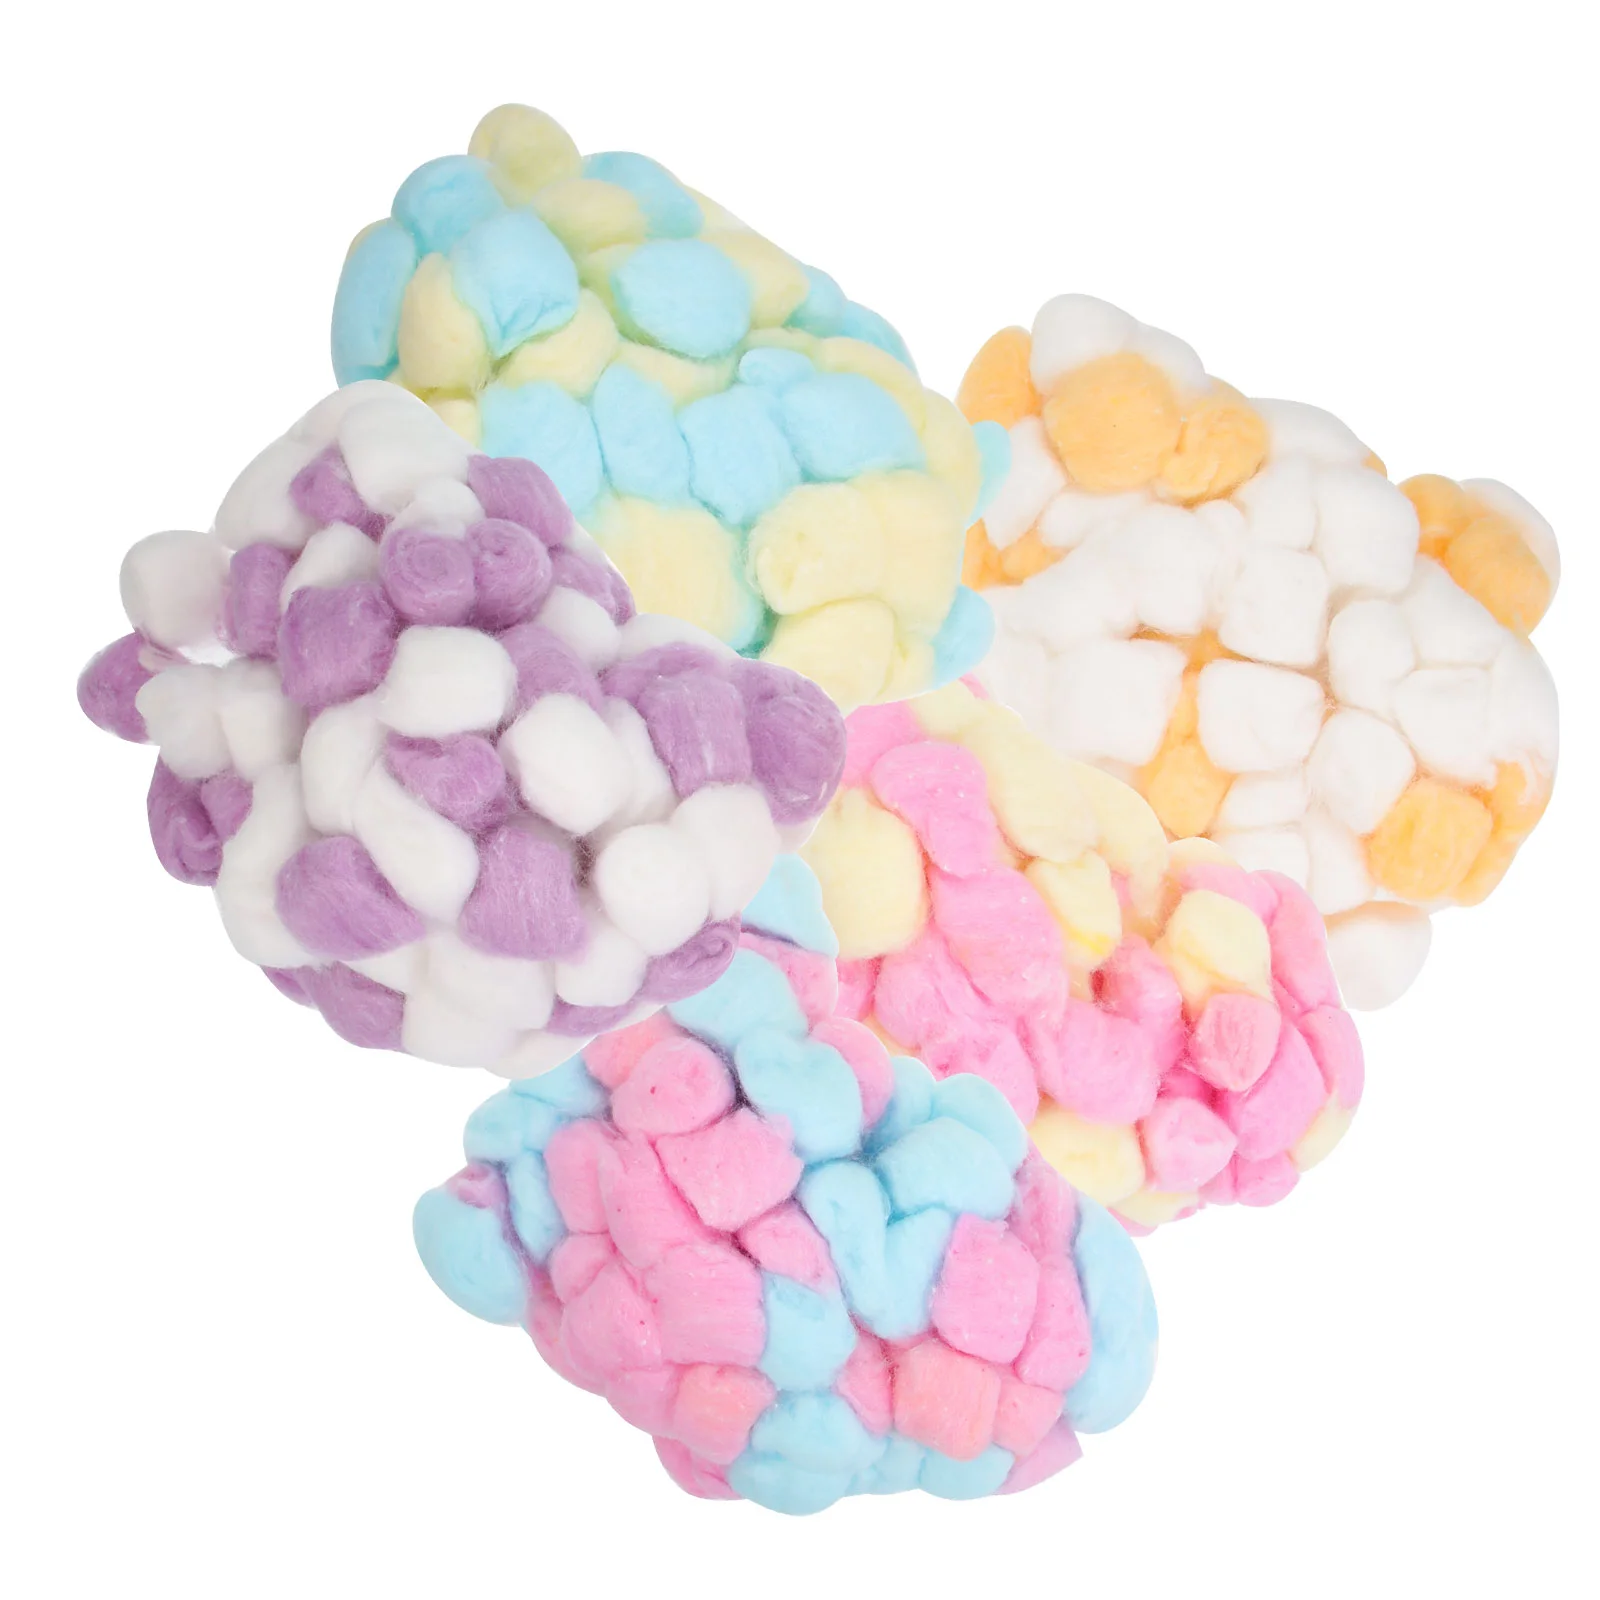 

500 Pcs Cotton Ball Mini Pom Poms Balls Crafts Puff Matting Colored DIY Fuzzy Absorbent Pompoms Christmas